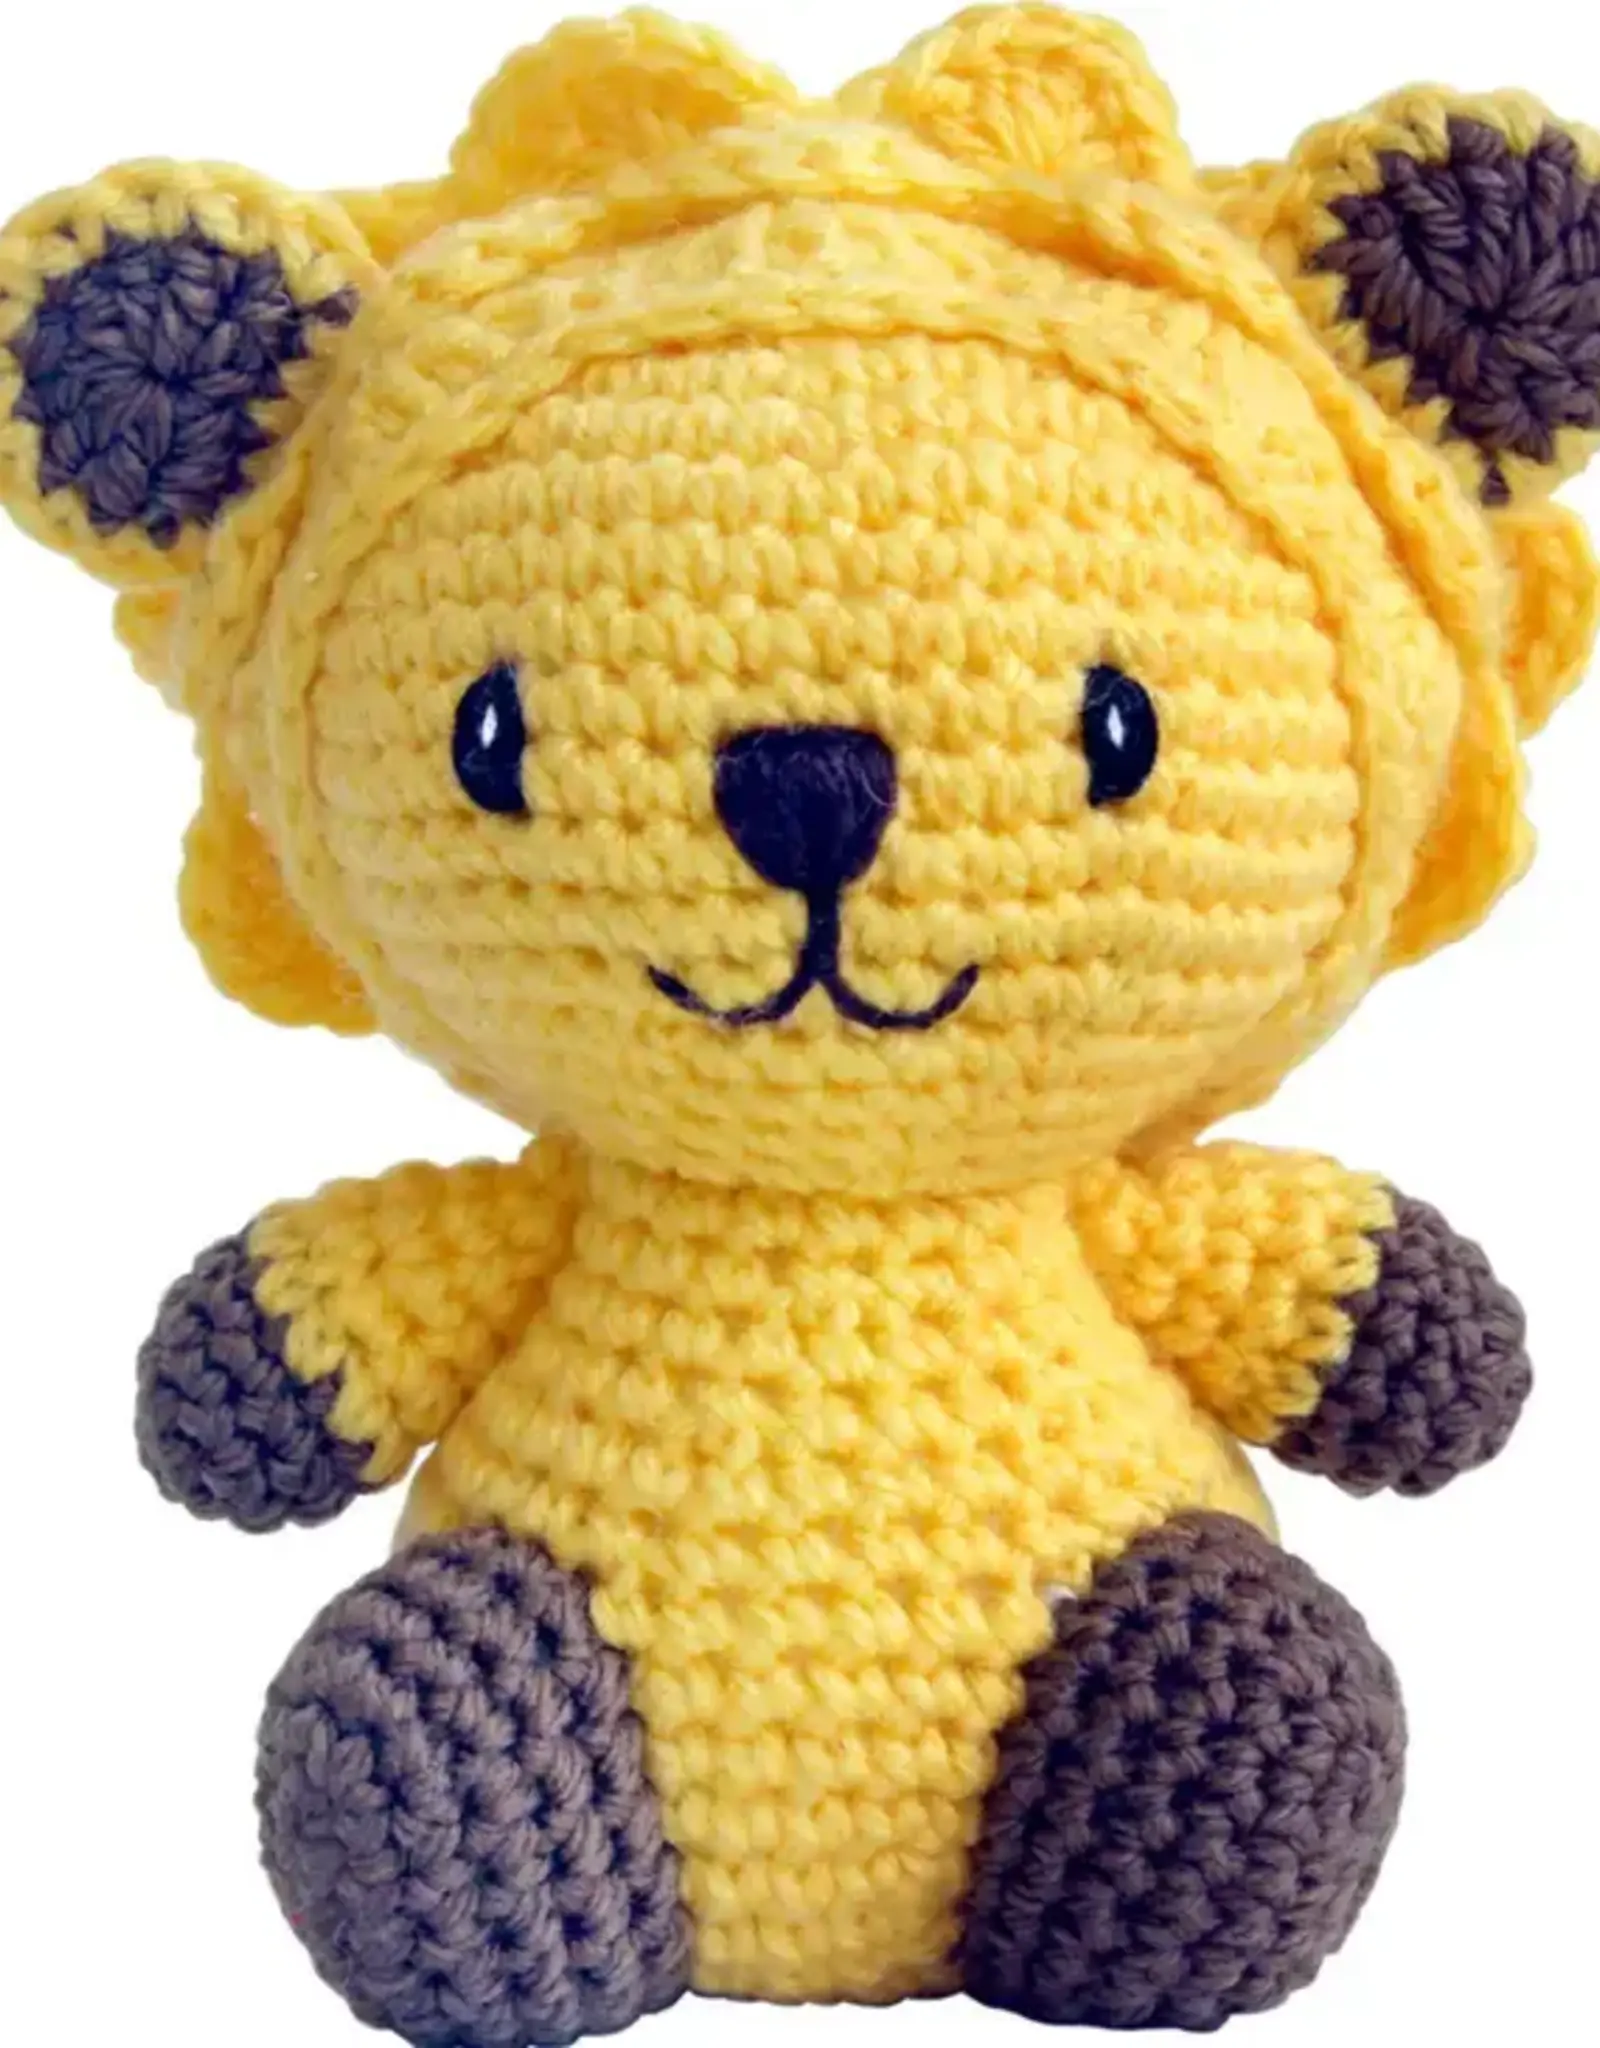 Silk Road Bazaar Knit Lion Doll